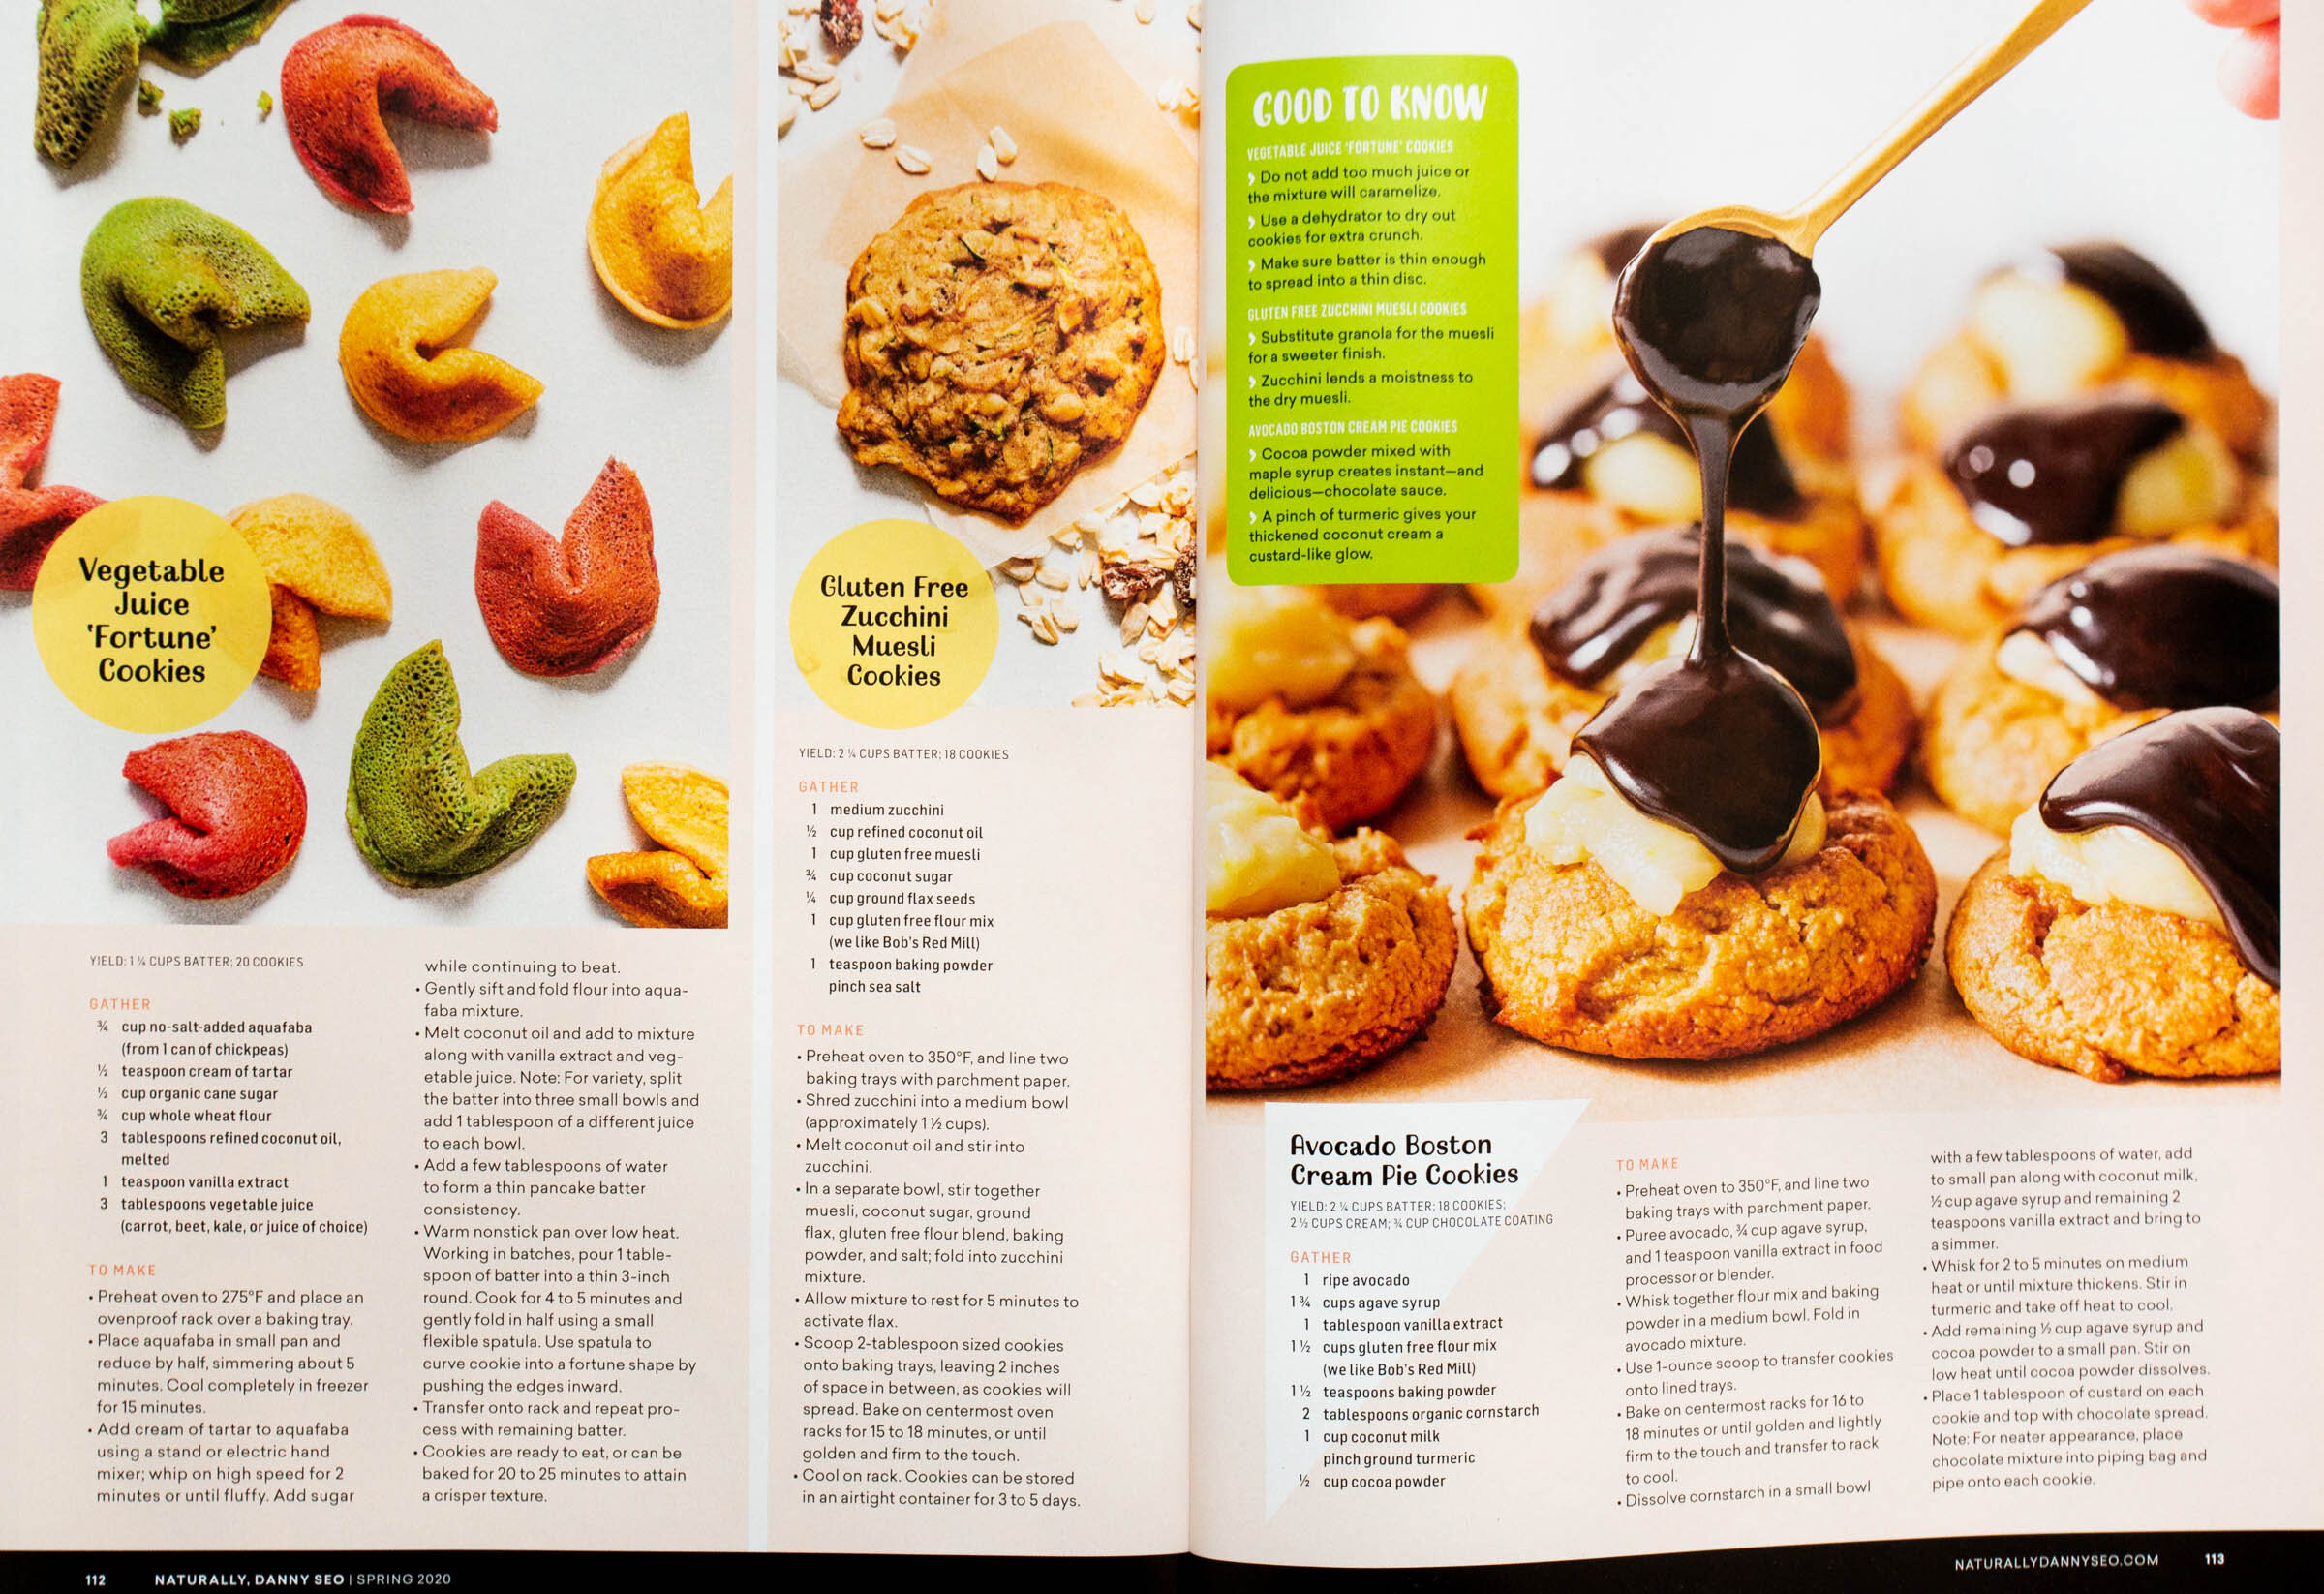 naturally-magazine-food-photography-veggie-cookies-healthy-baking-2.jpg